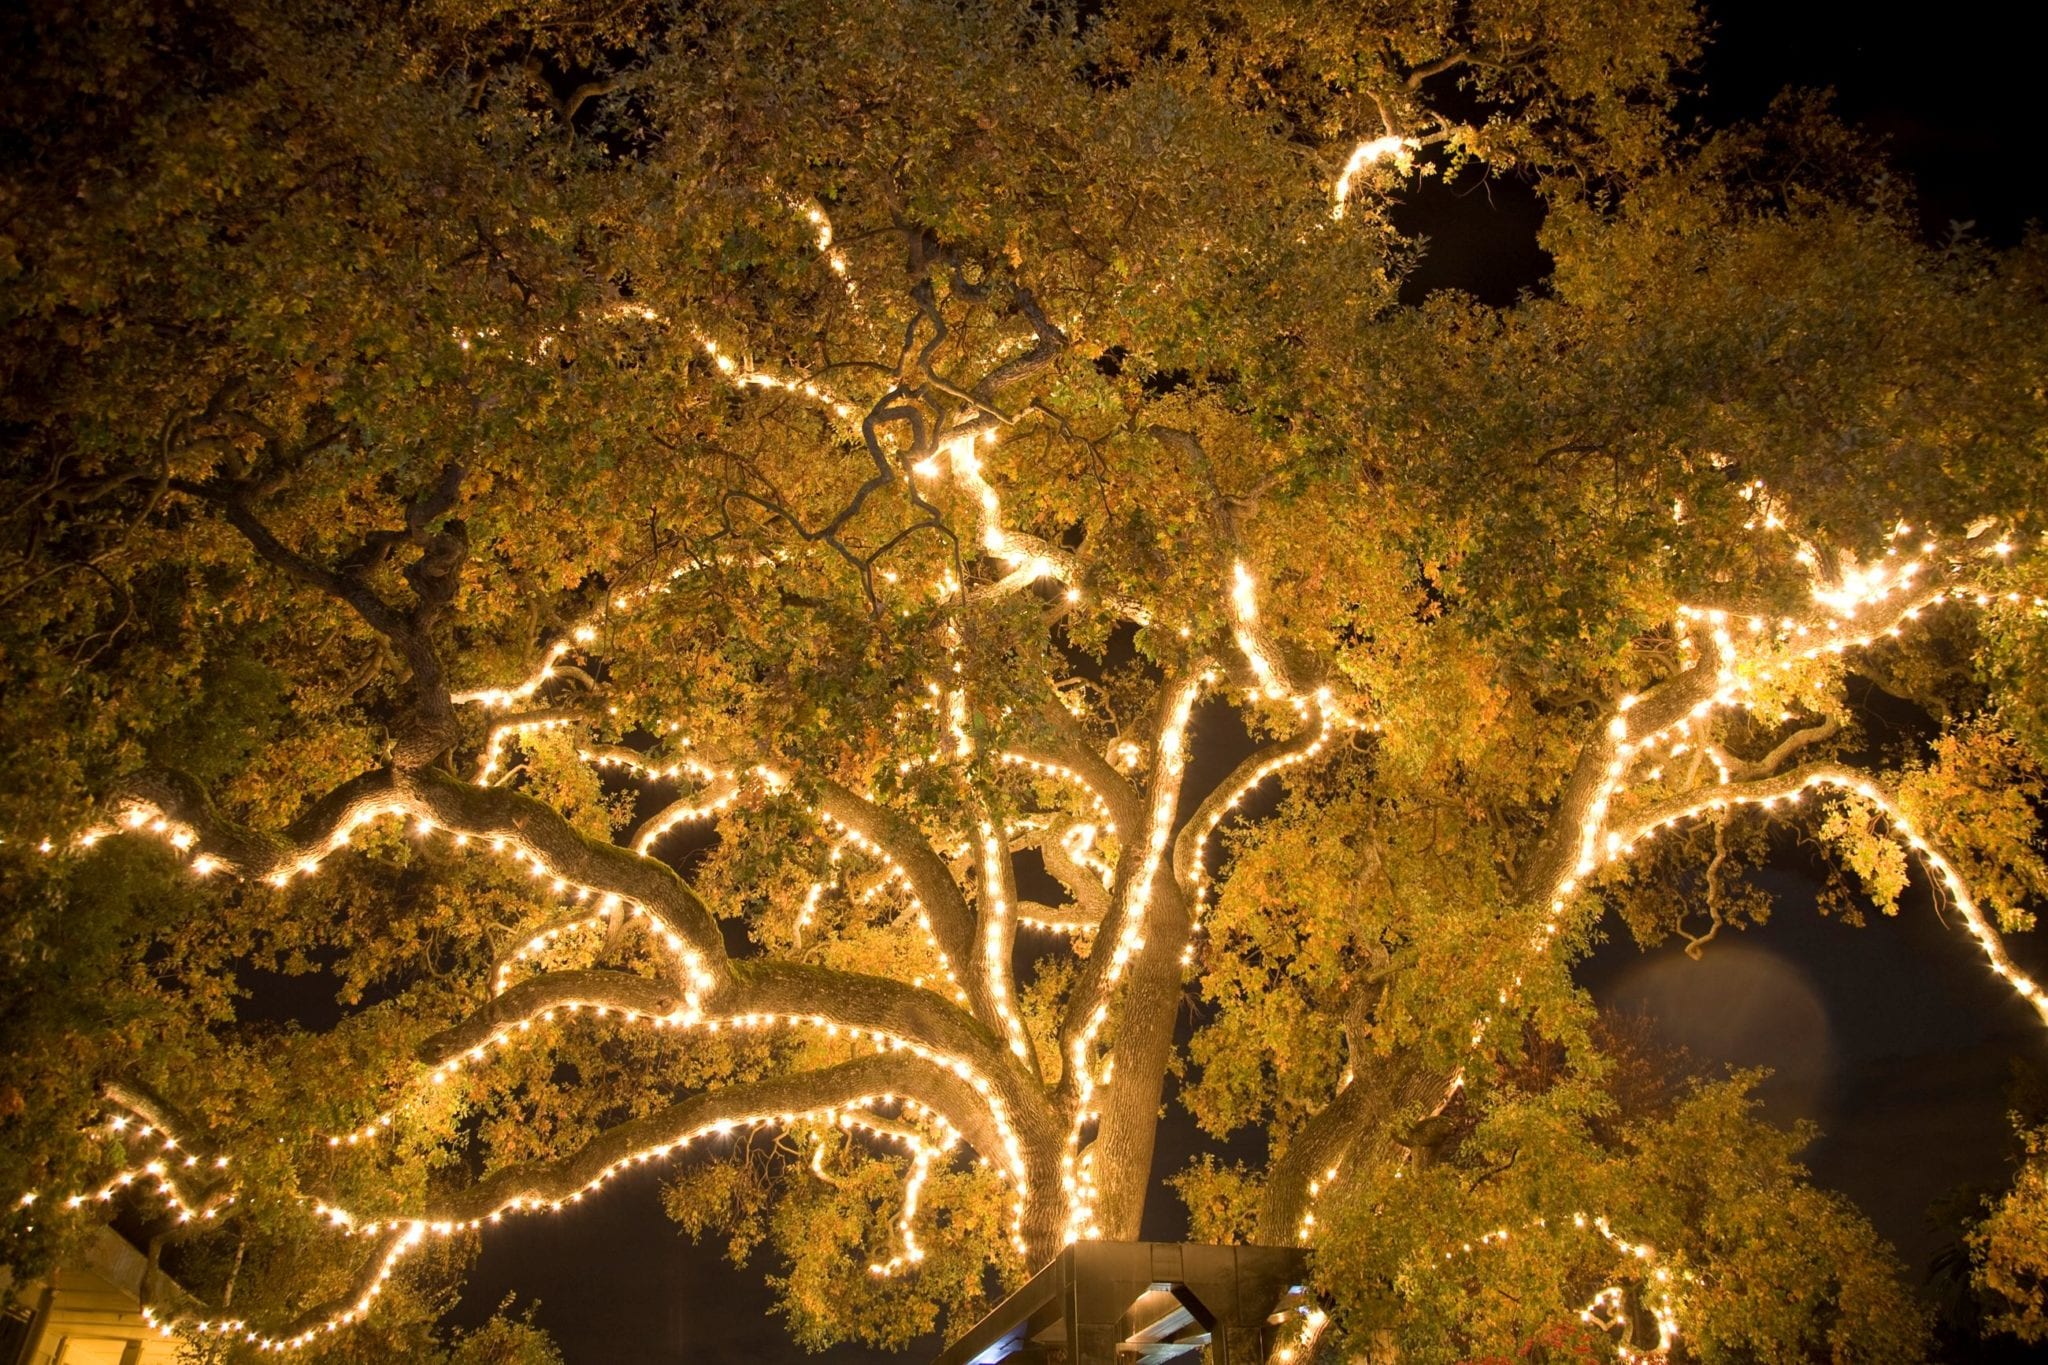 Lighting of the Old Oak Tree - Visit Tri-Valley